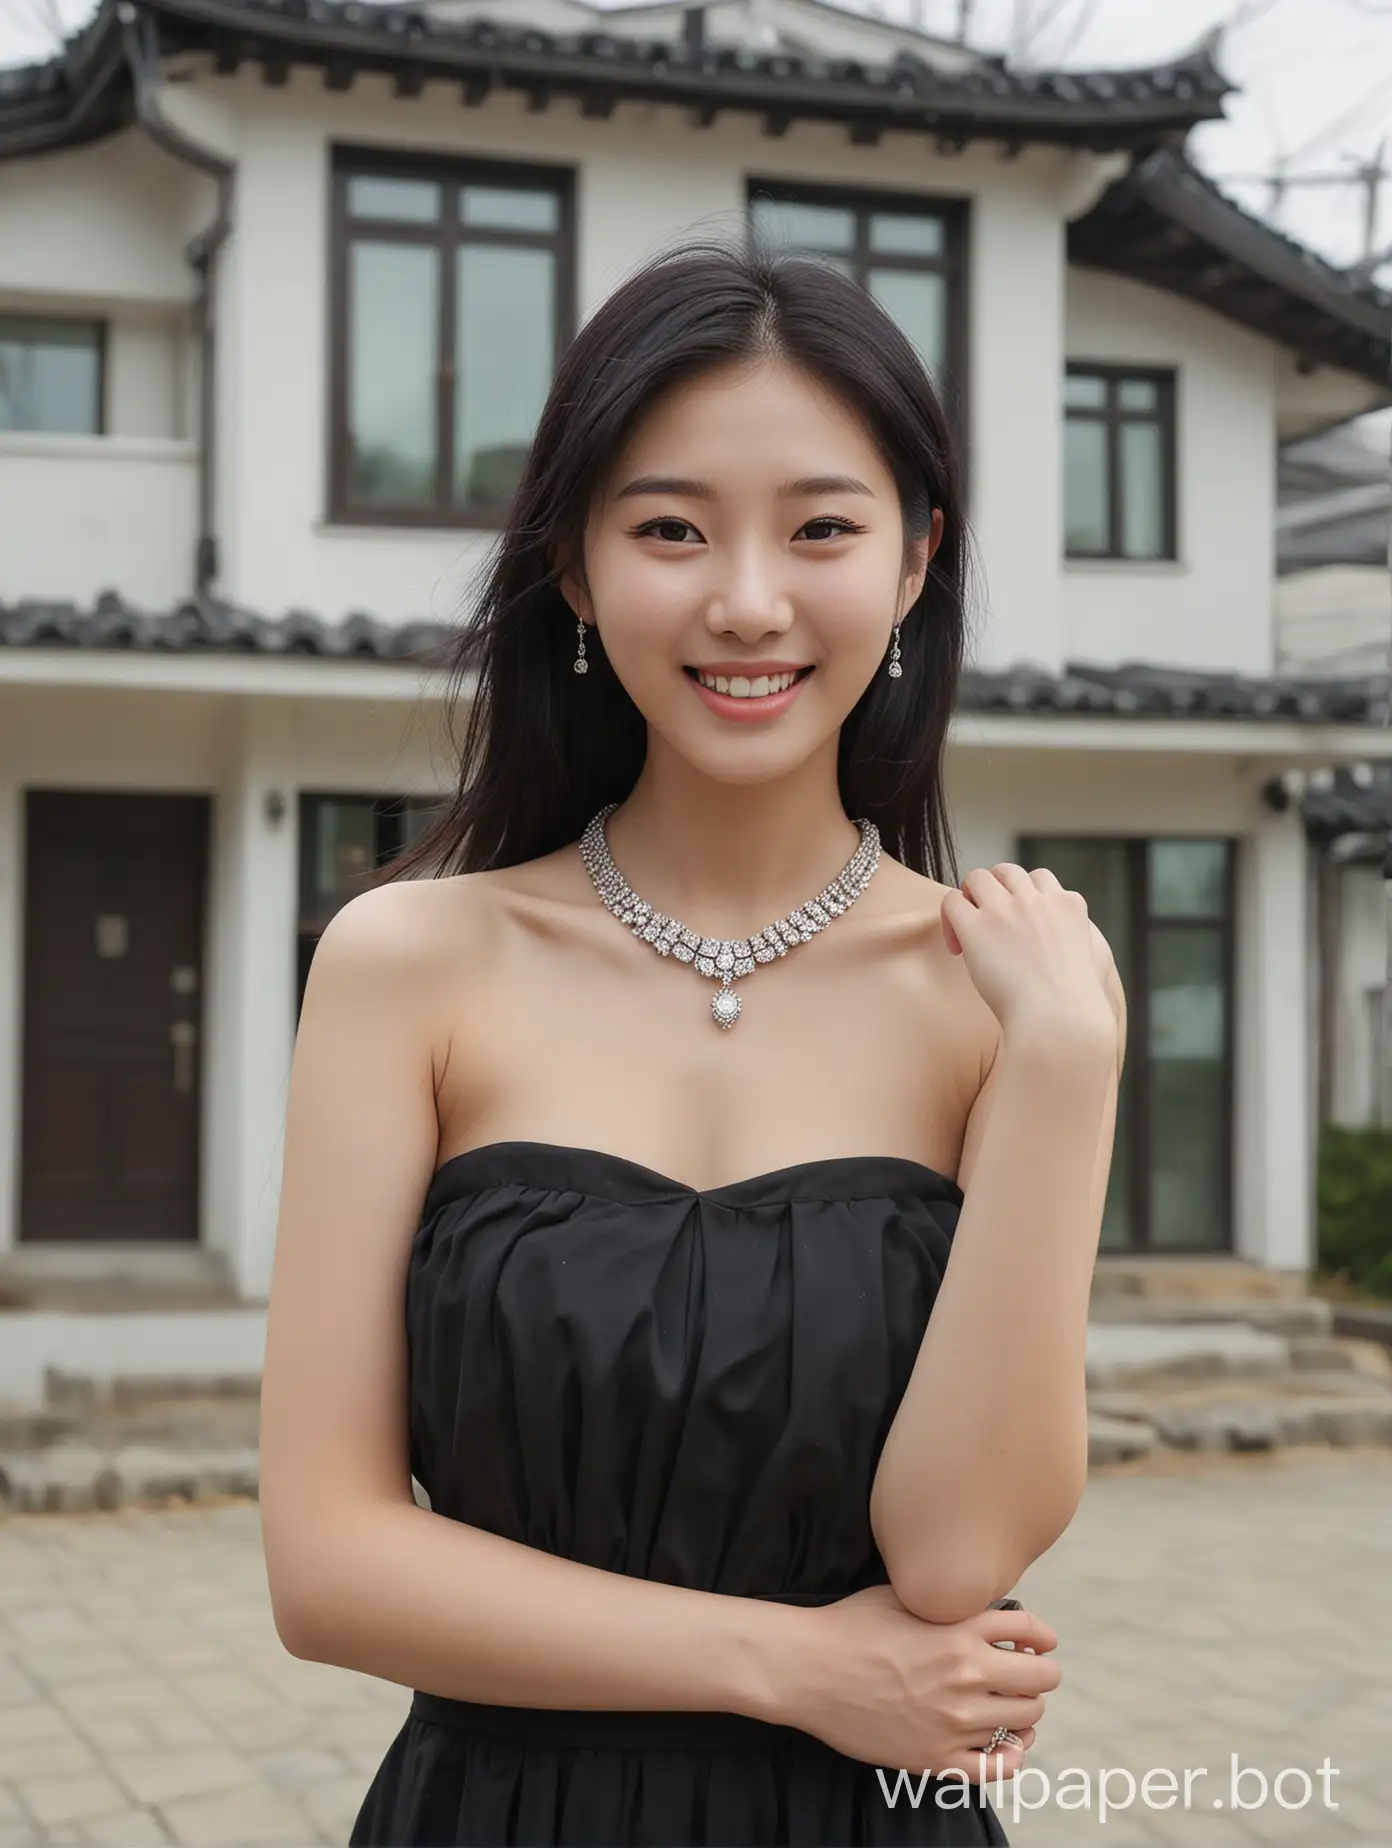 Joyful-South-Korean-Gyeonggidol-Girl-in-Modern-House-with-Elegant-Diamond-Necklace